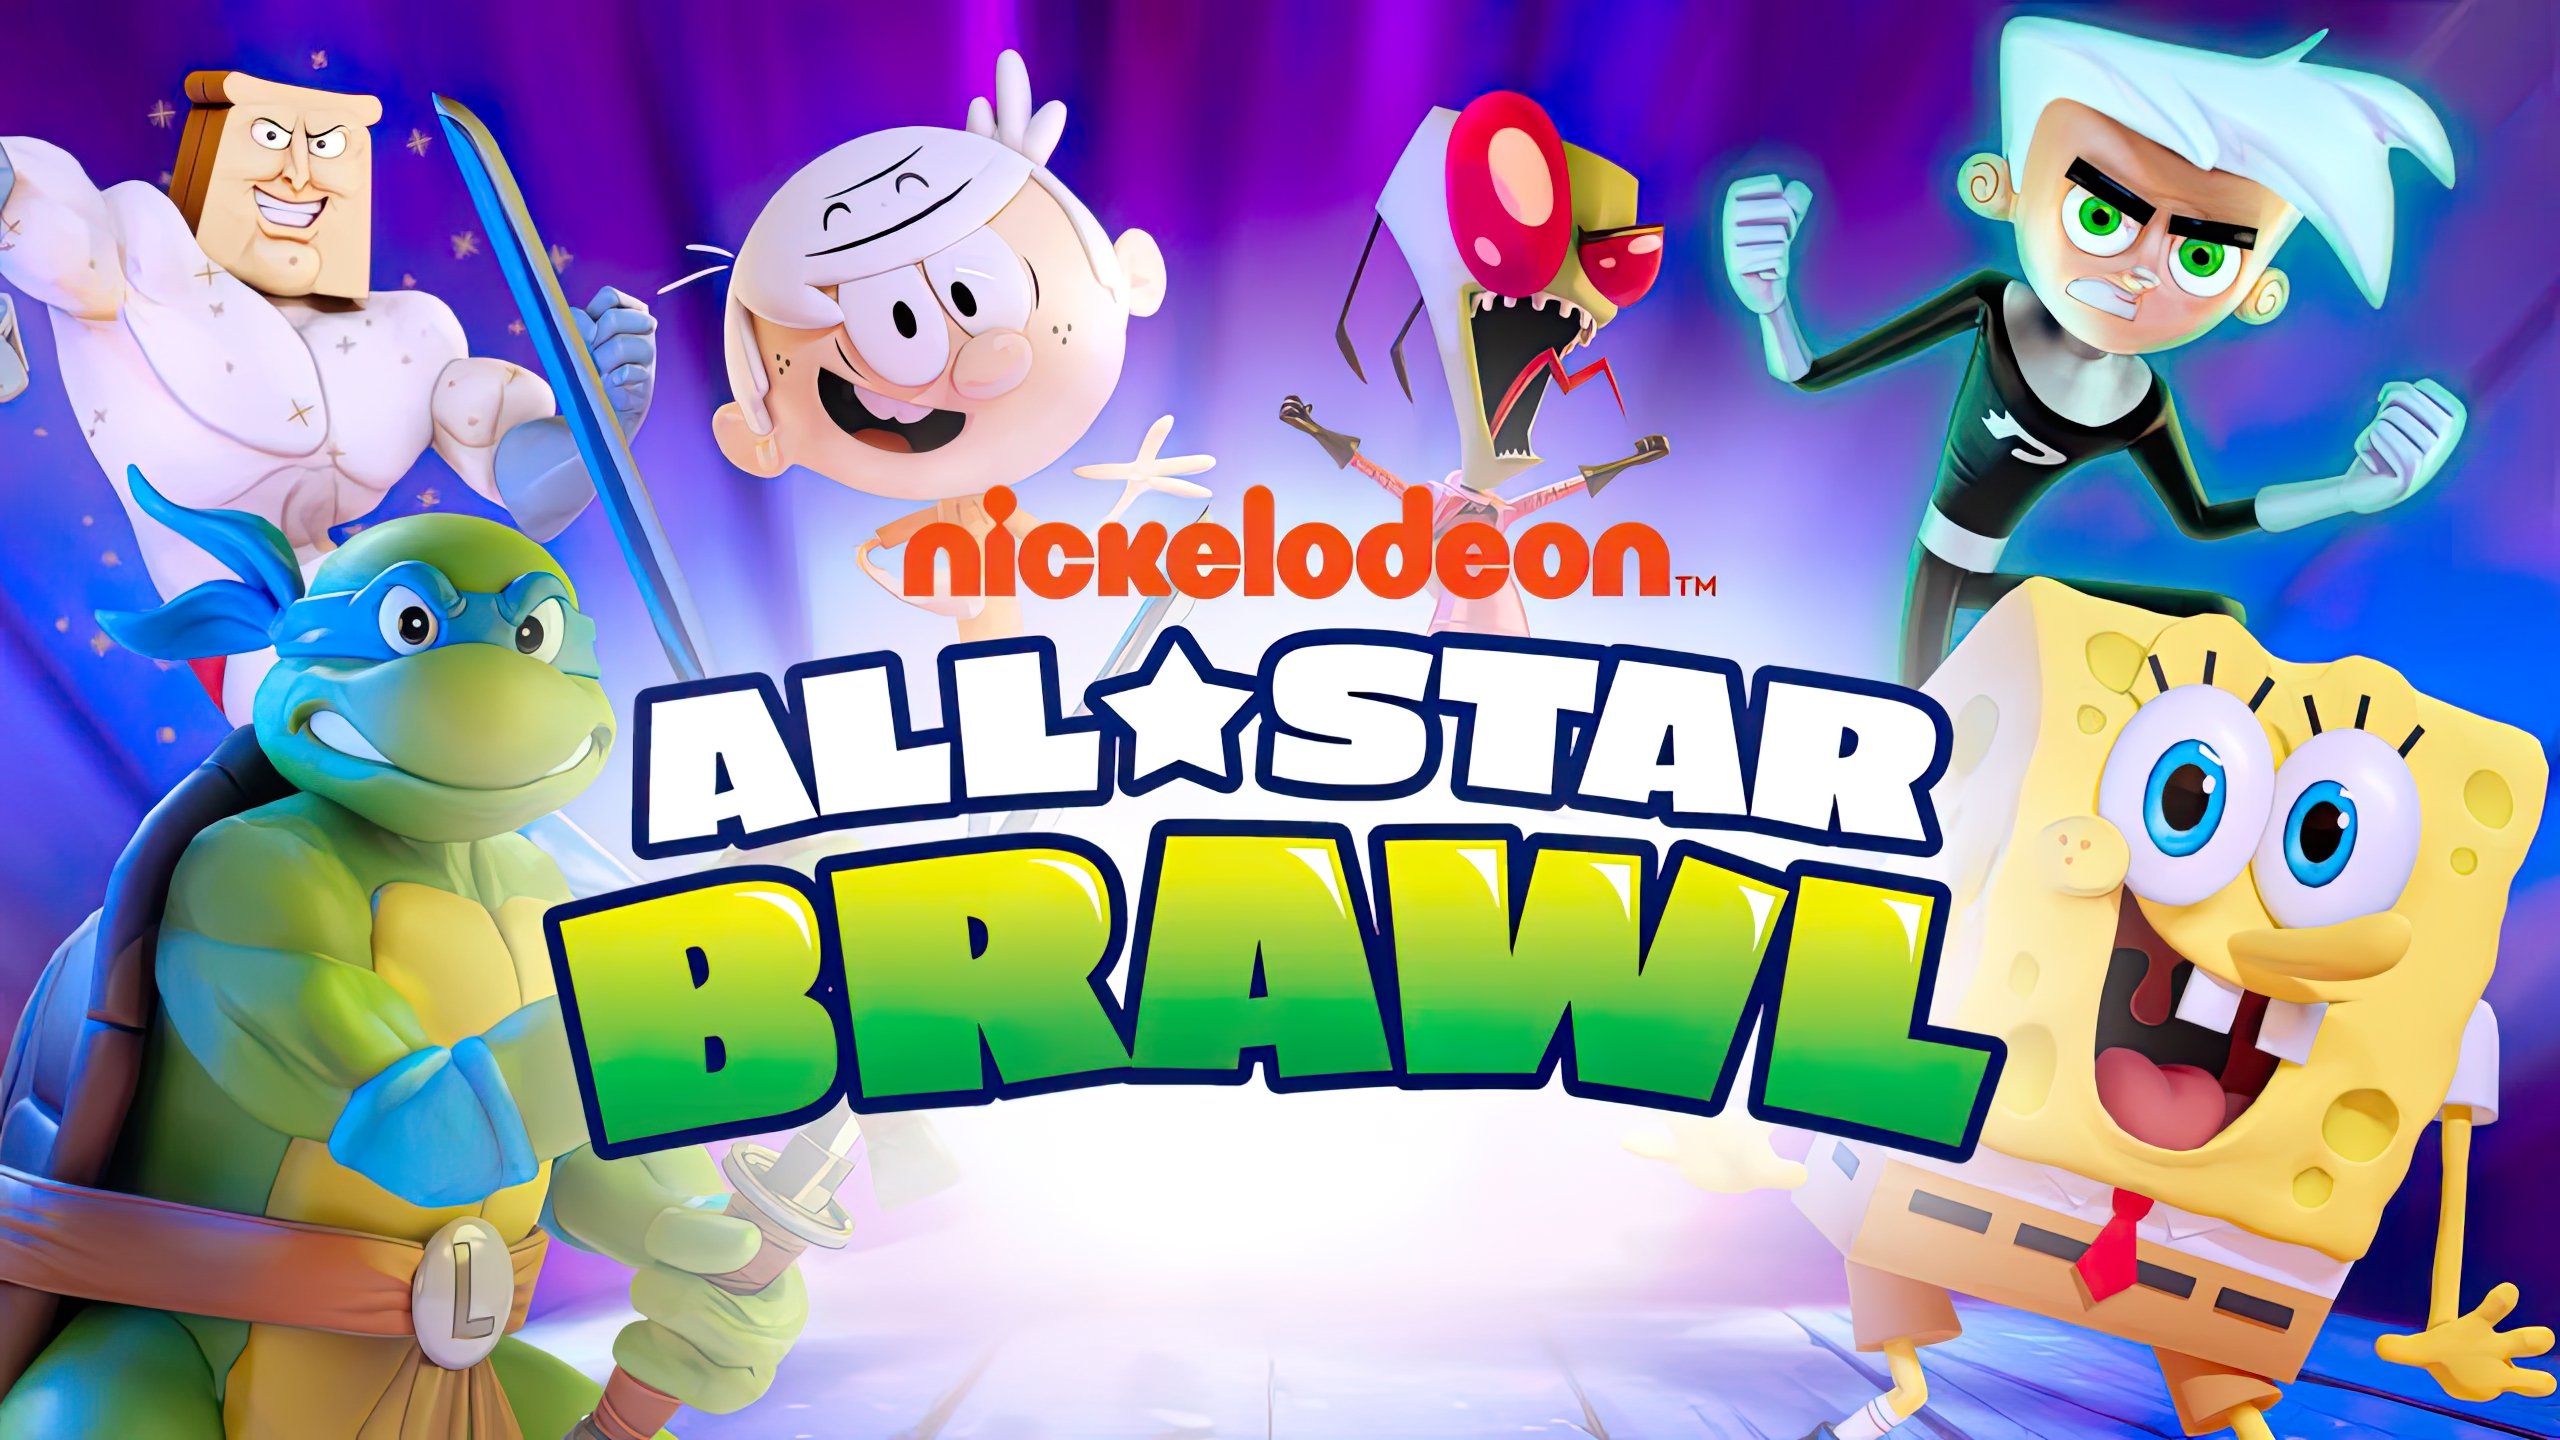 Nickelodeon All-Star Brawl 